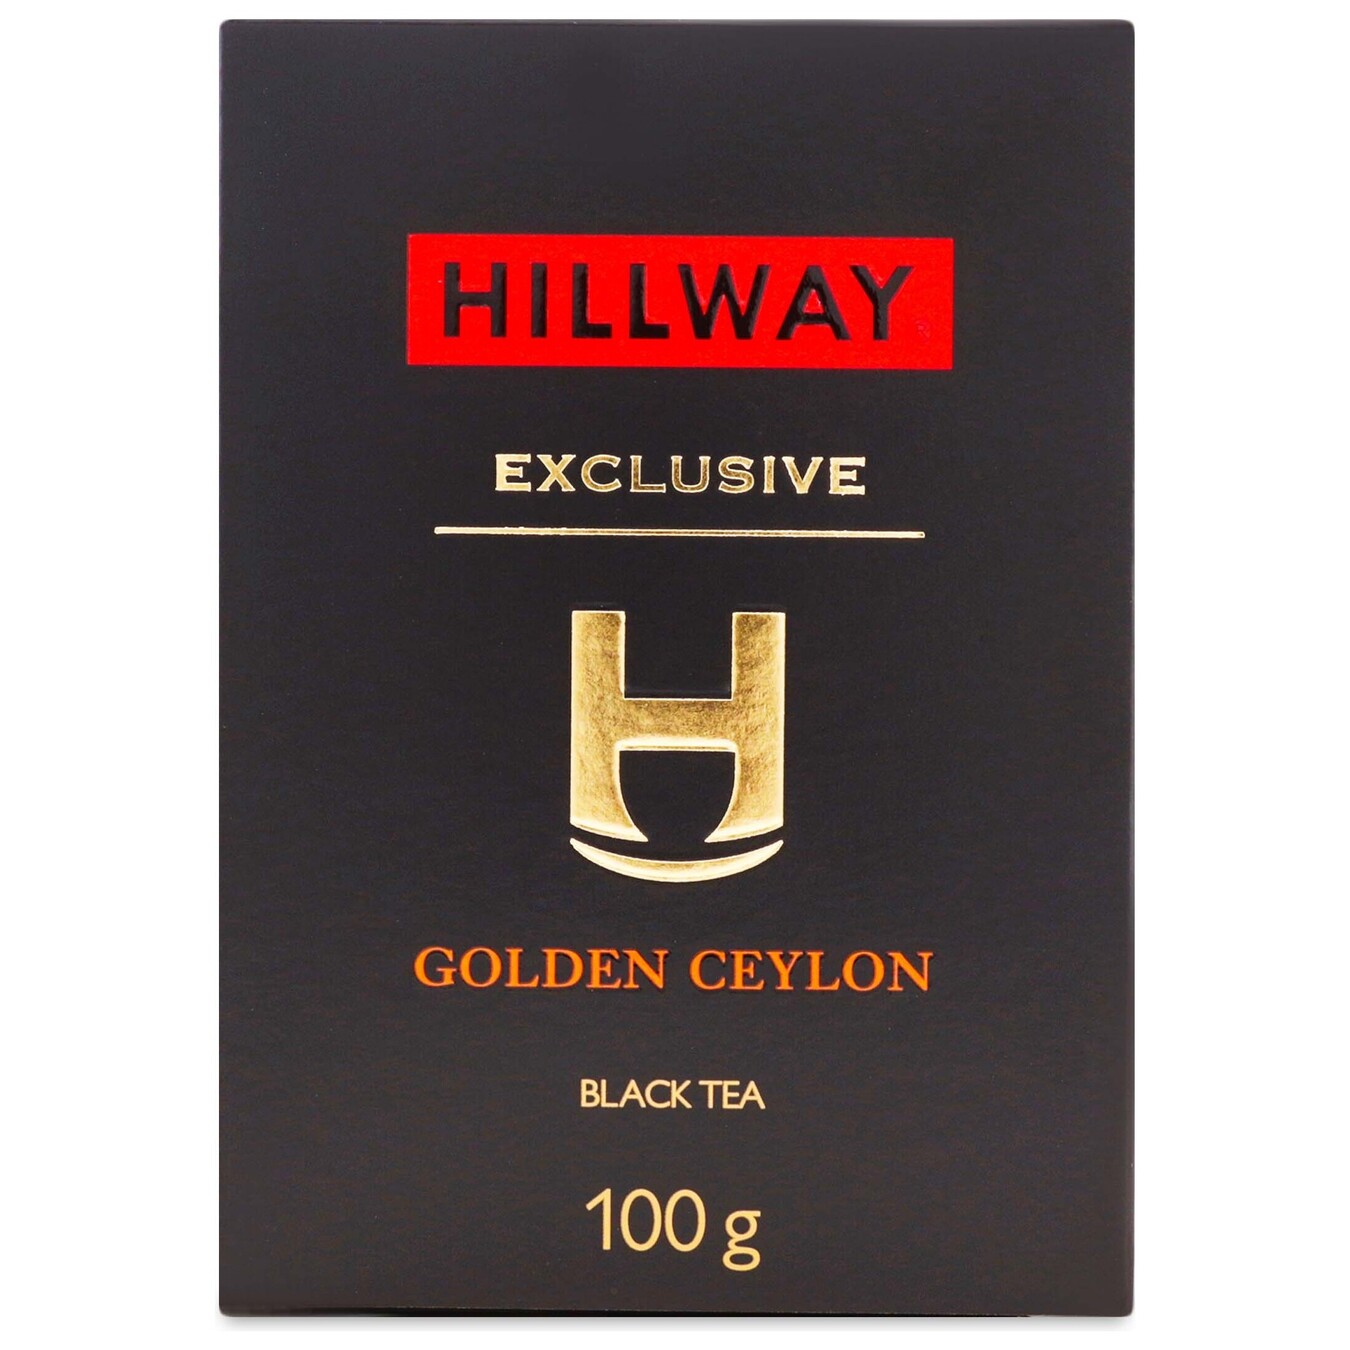 Tea Exclusive Golden Ceylon Hillway 100g